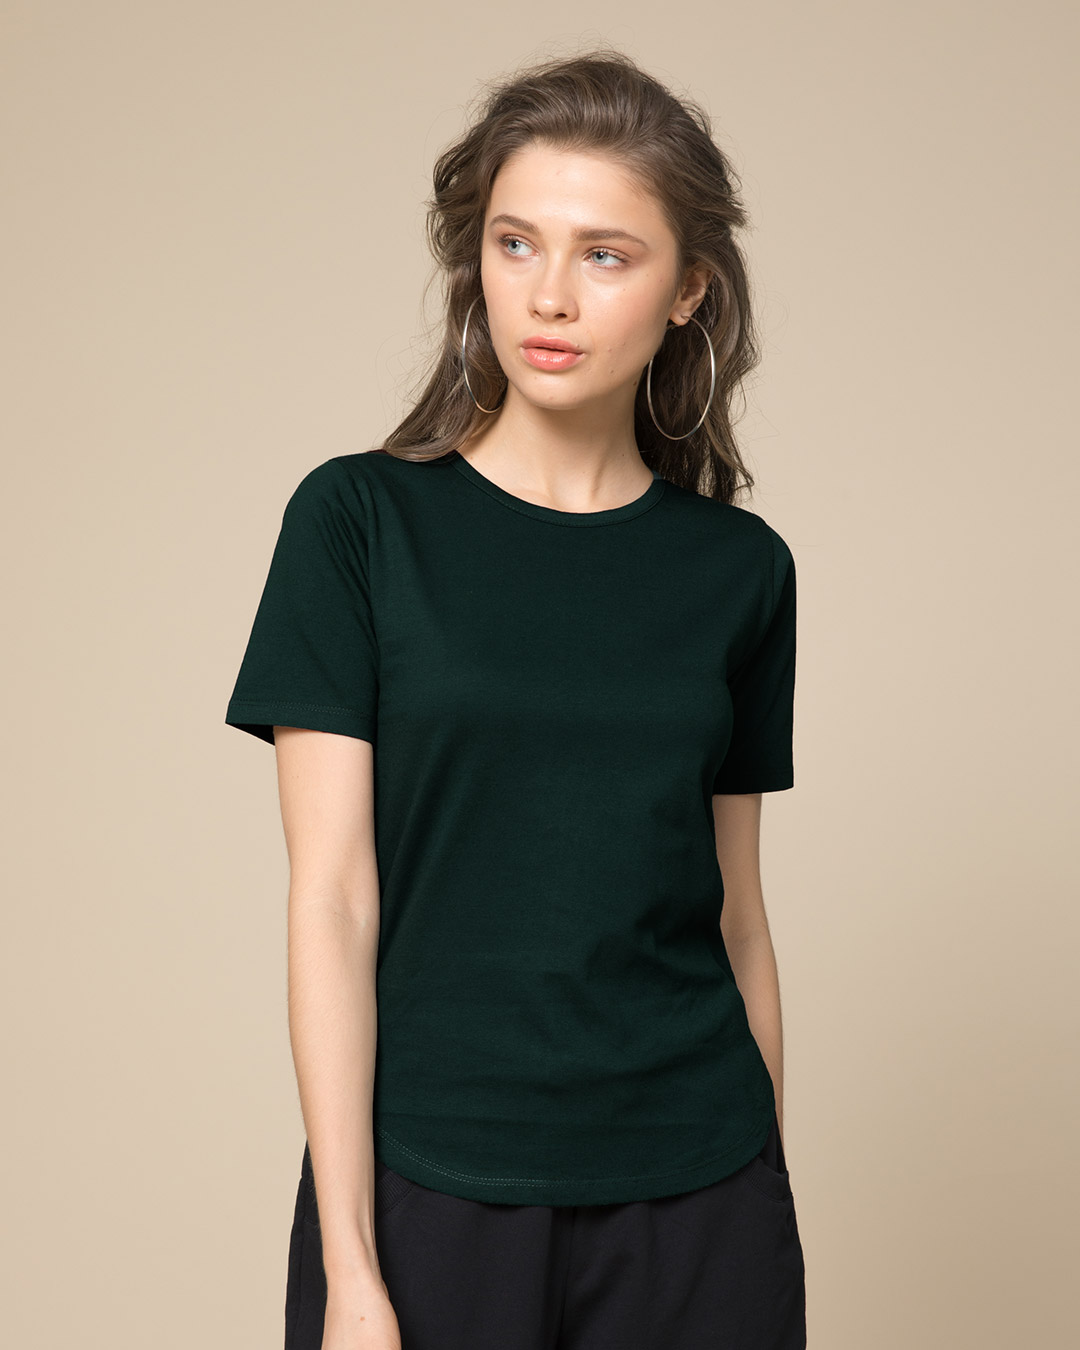 Buy Pine Green Basic Round Hem T-Shirt for Women green Online at Bewakoof